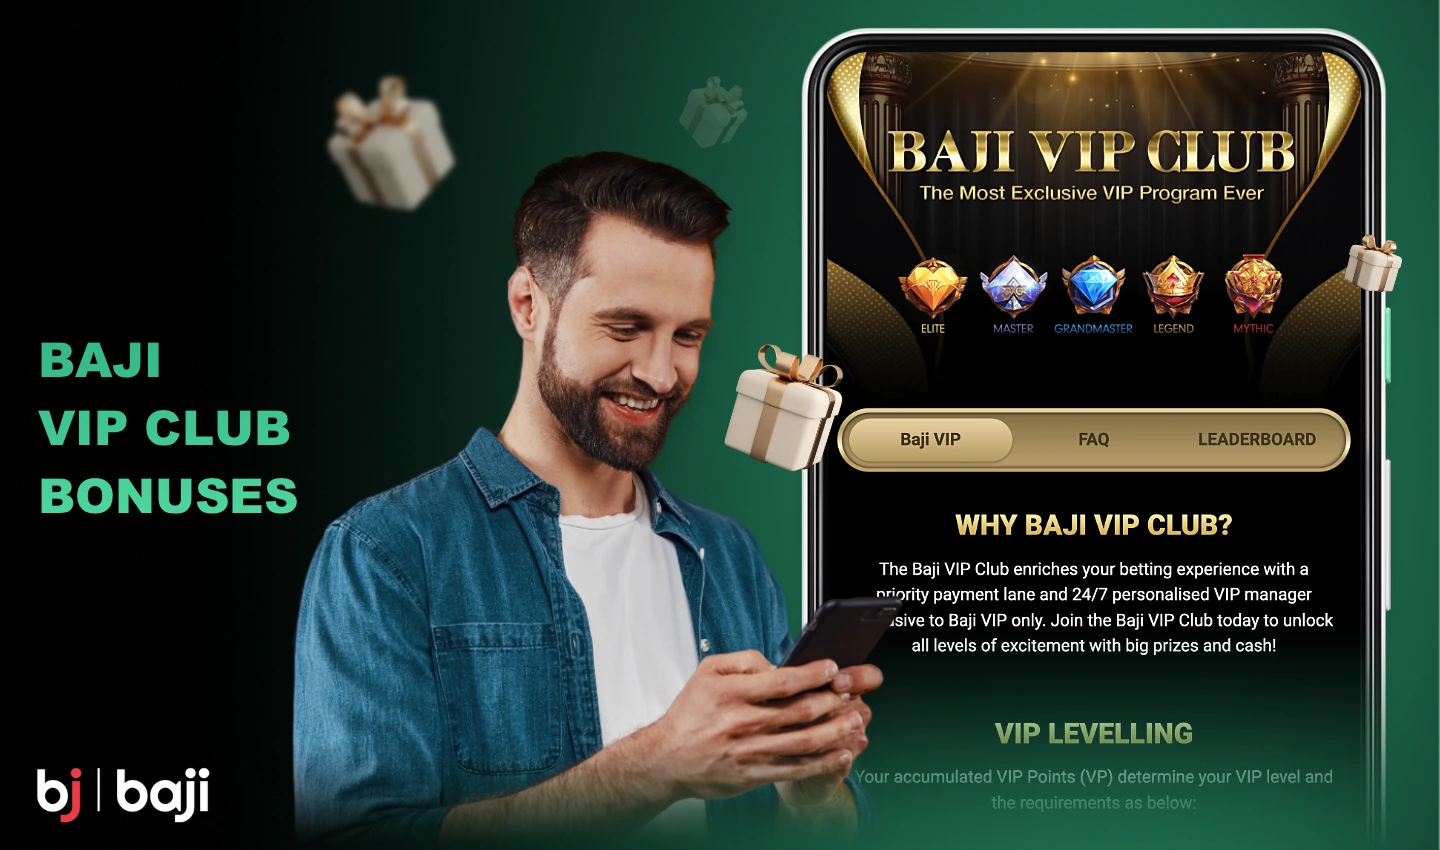 VIP club bonuses at Baji are a special type of bonus